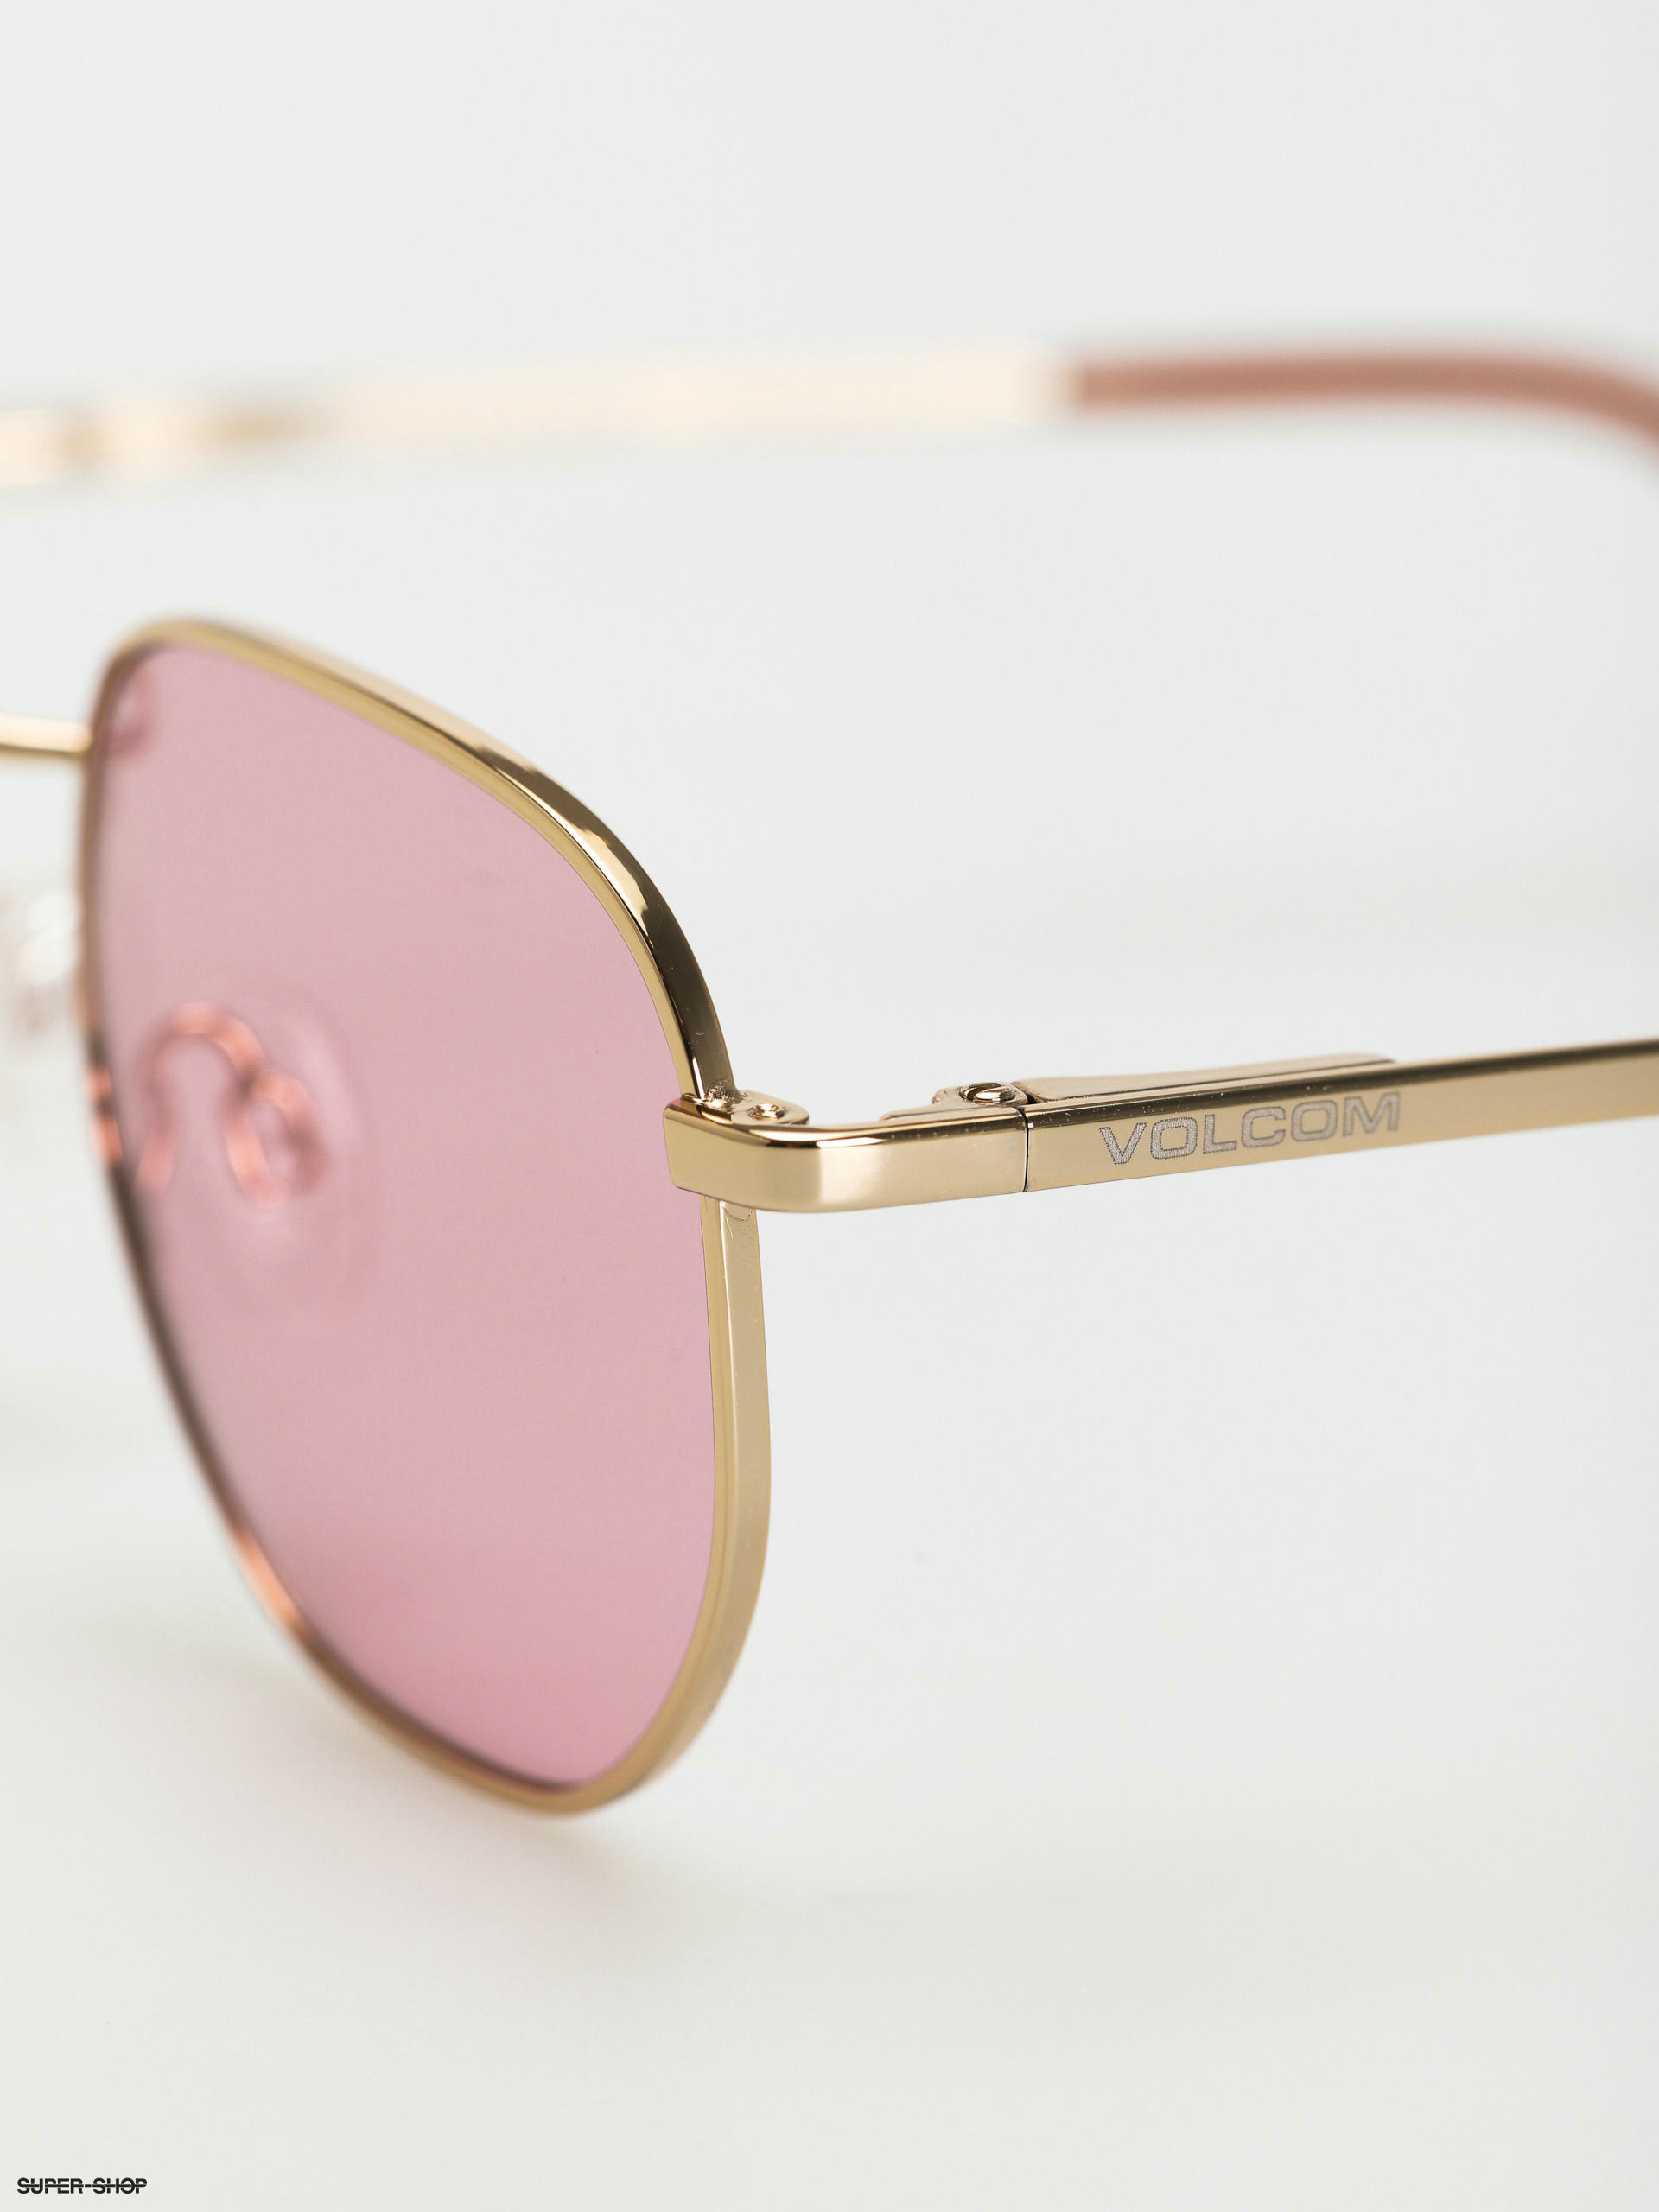 Volcom Happening Gloss Gold/Pink Sunglasses (pink)